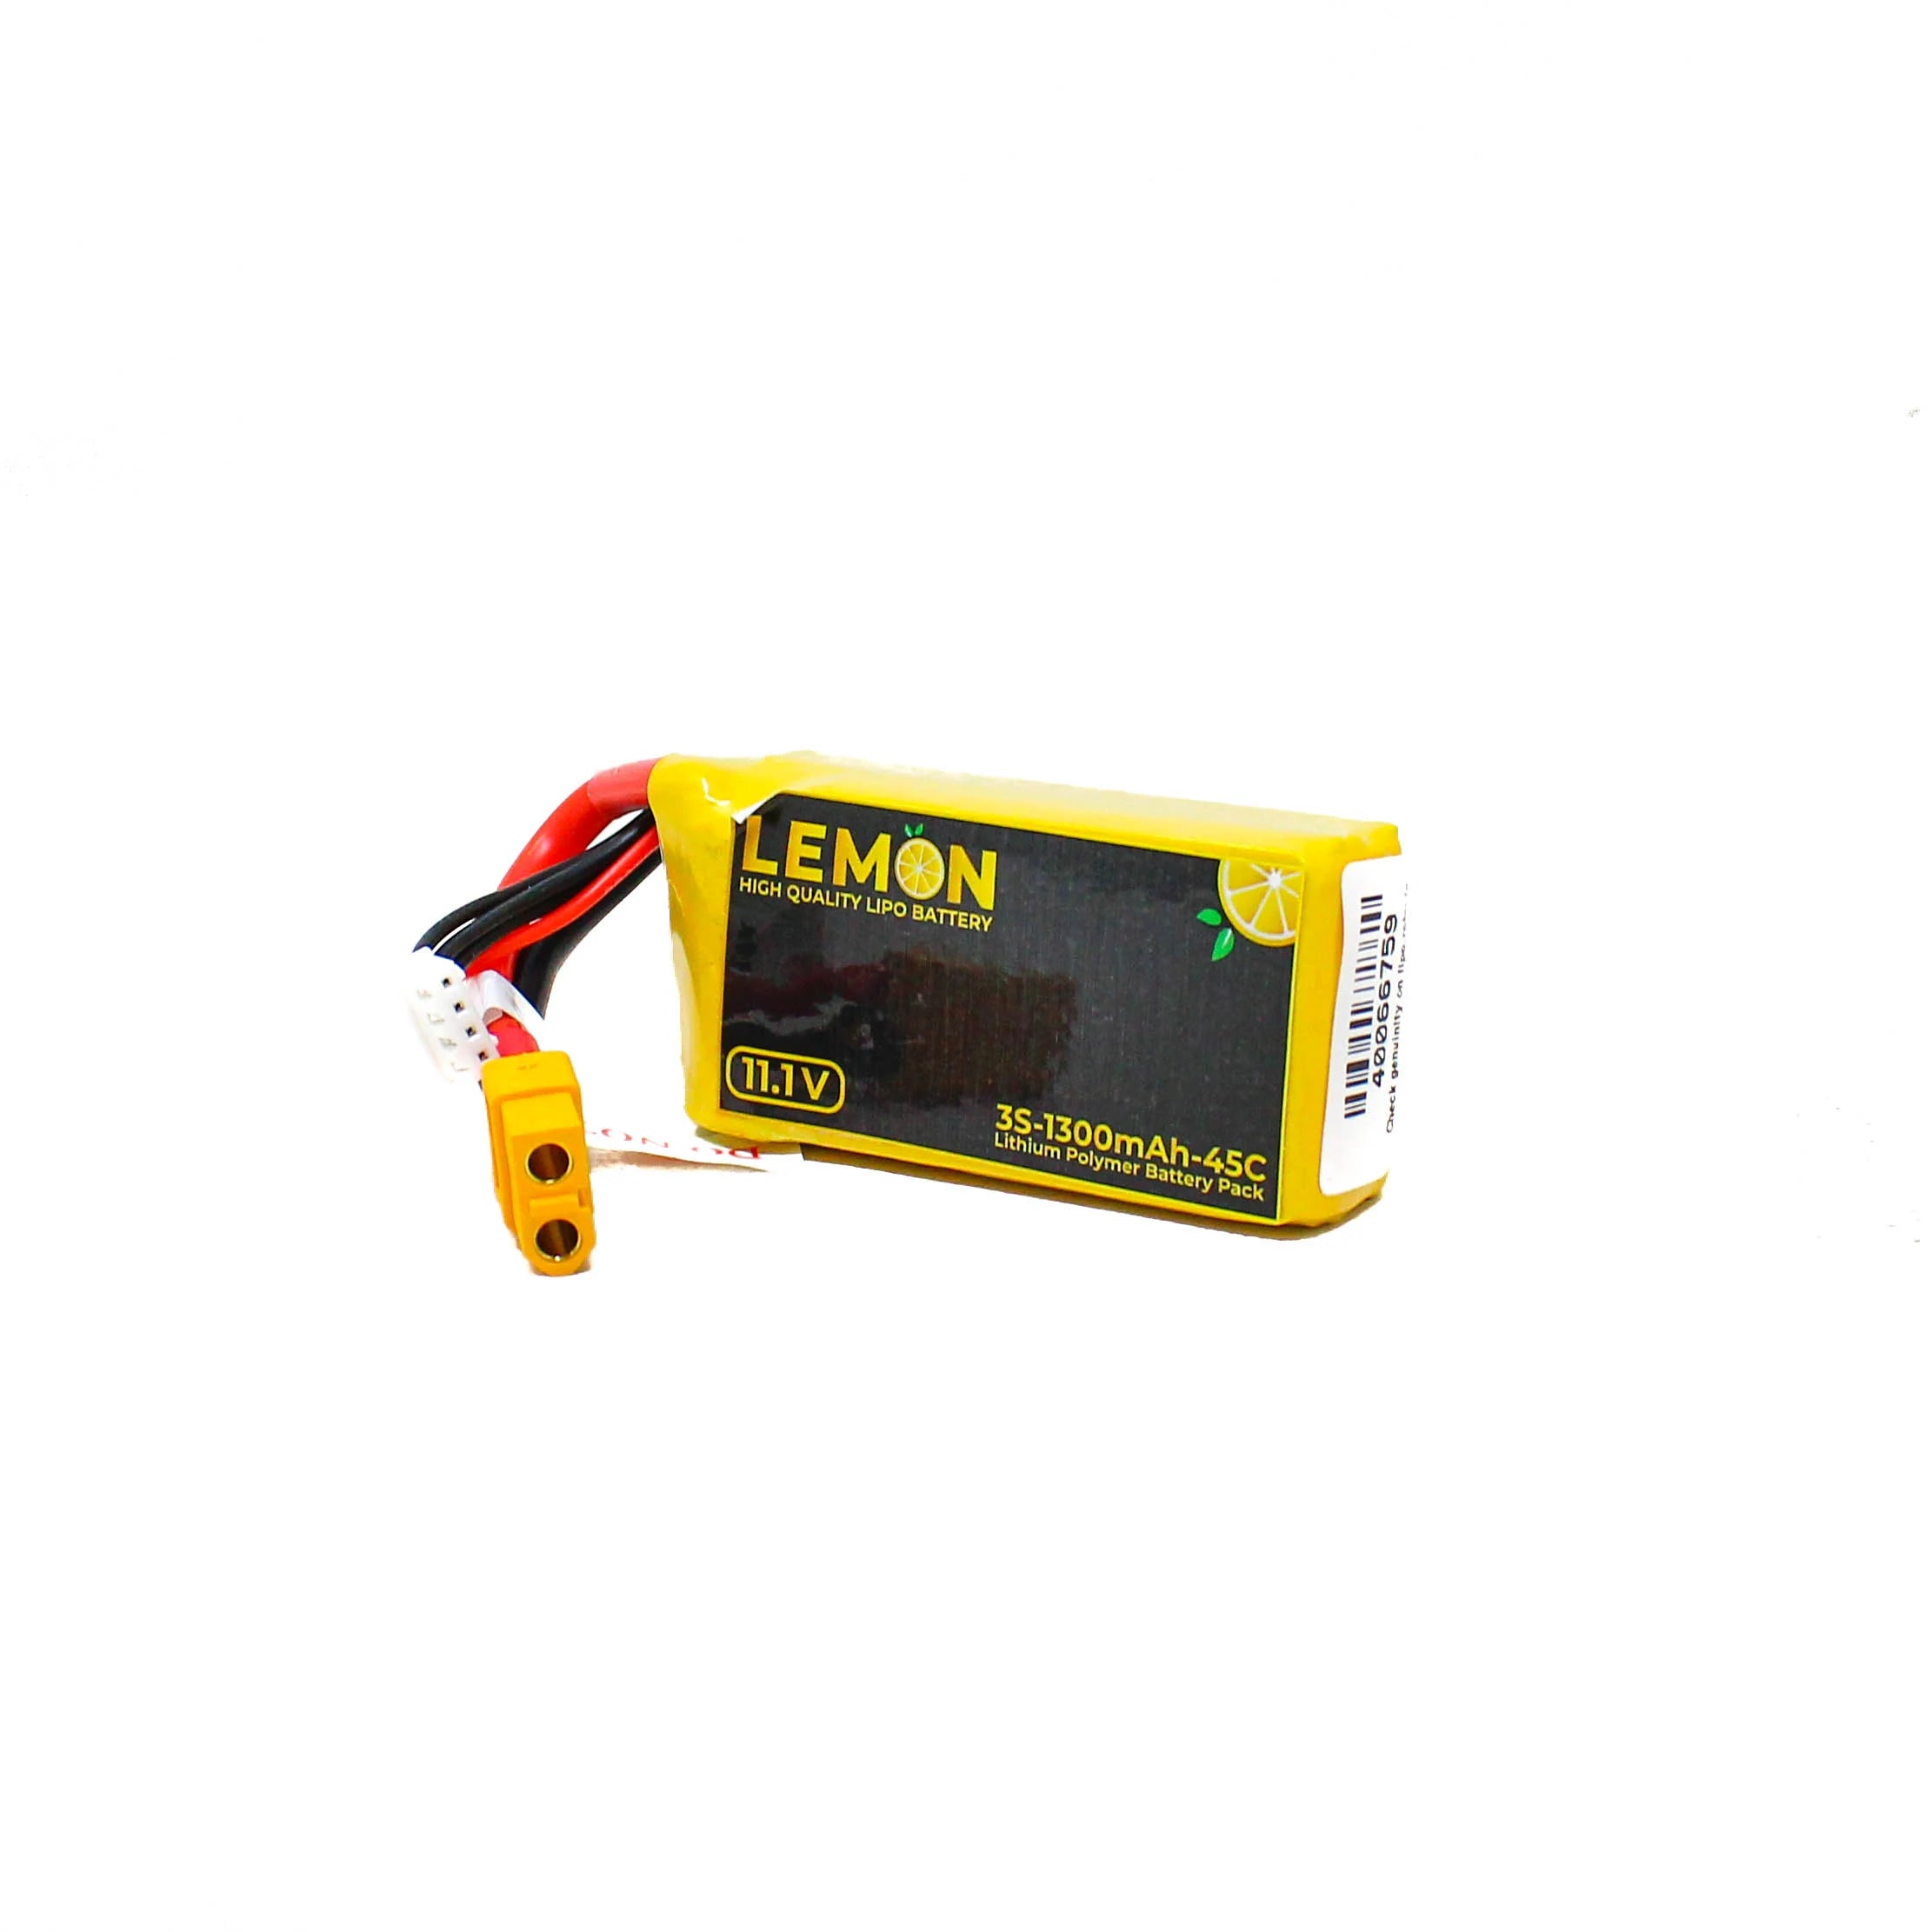 Batterie LiPo 3S LemonRC 1000mah - 11,1V (35C) XT60